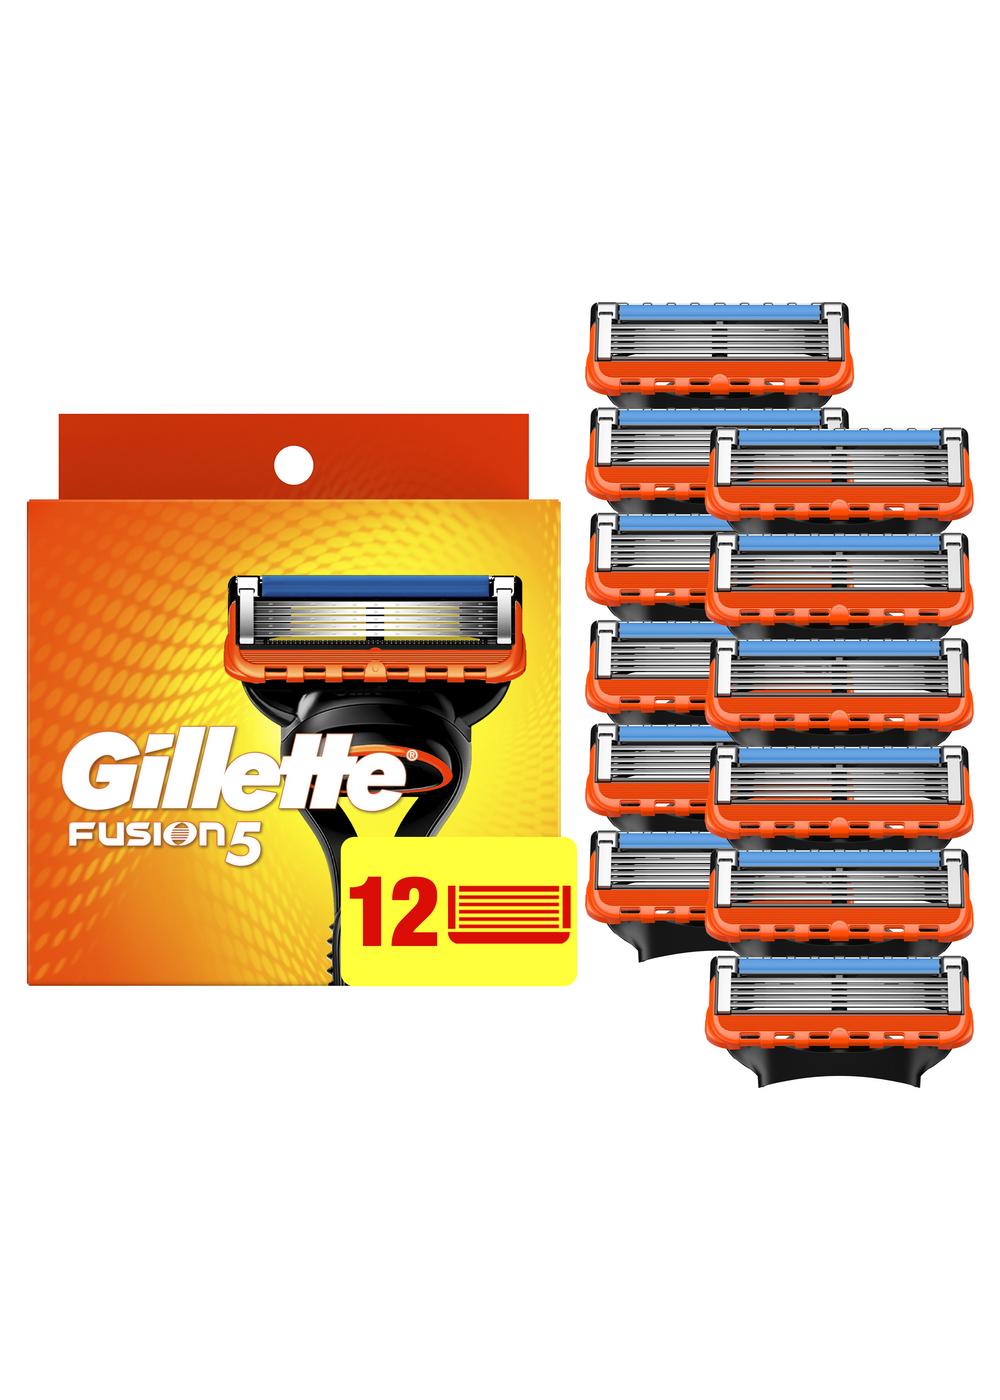 Gillette Fusion5 Razor Blade Refills; image 5 of 10